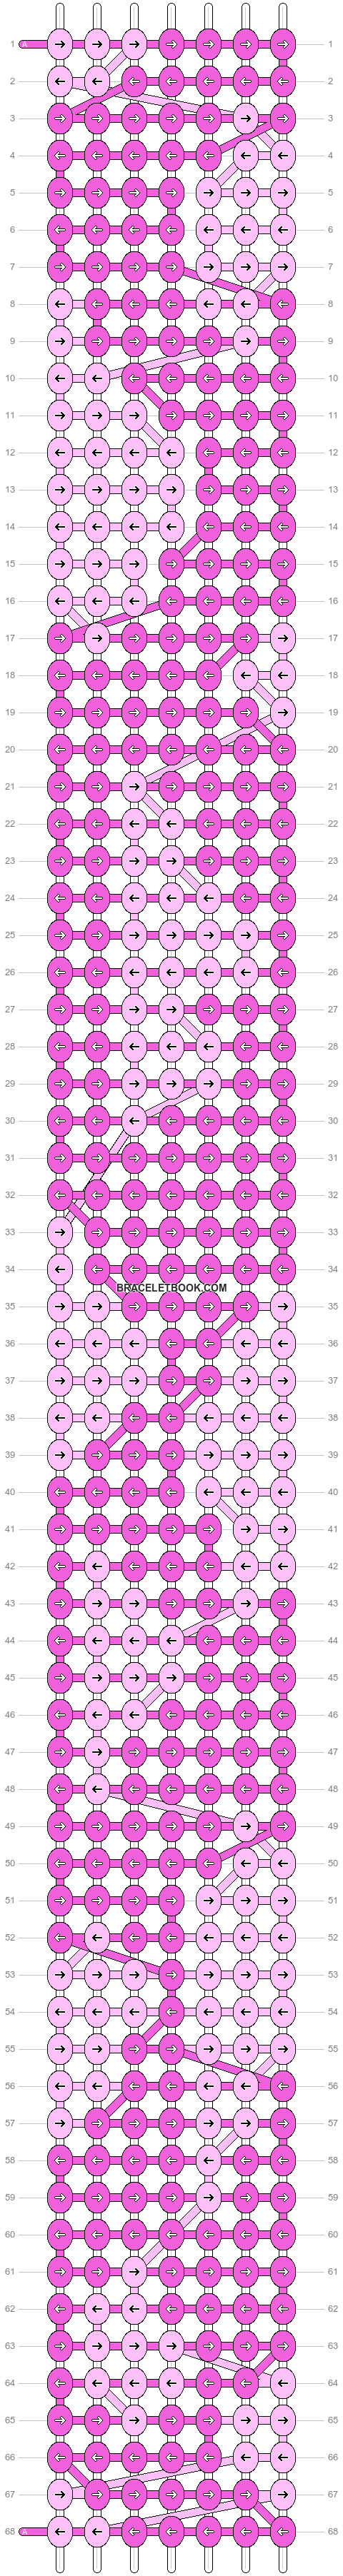 Alpha pattern #1654 variation #40039 pattern